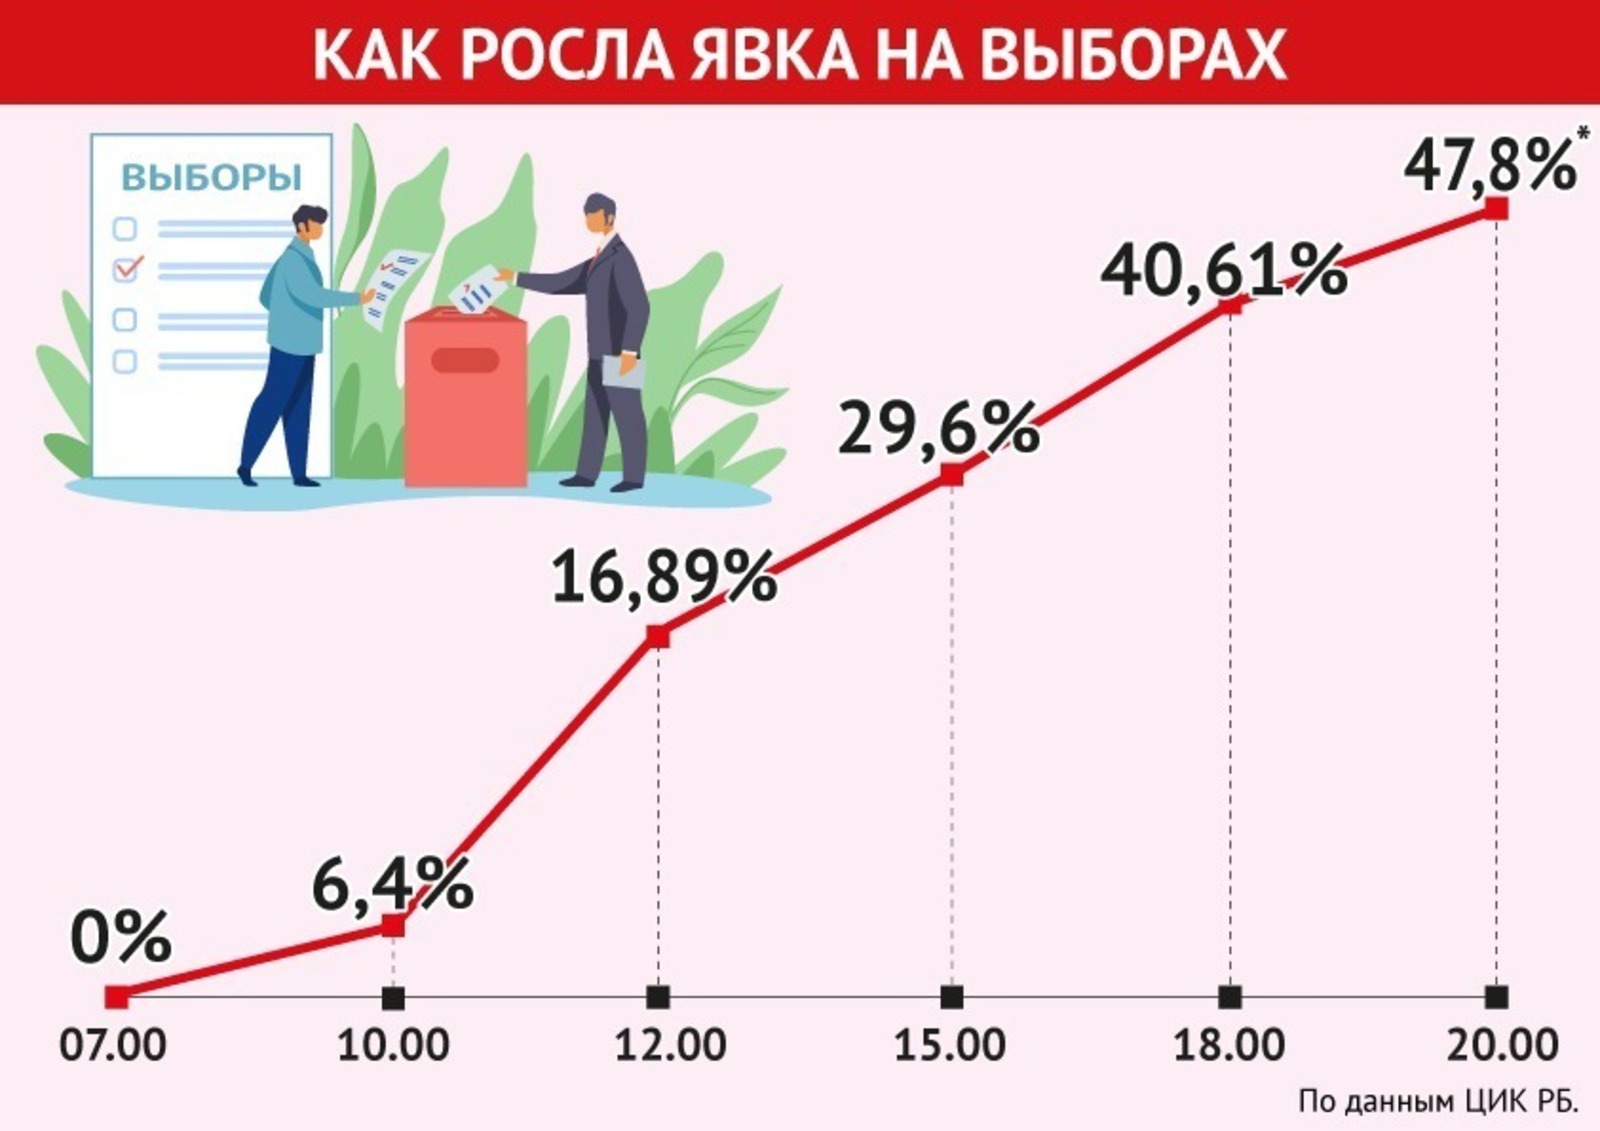 Явка на выборах в Башкирии на 20.00 составила 47,8%